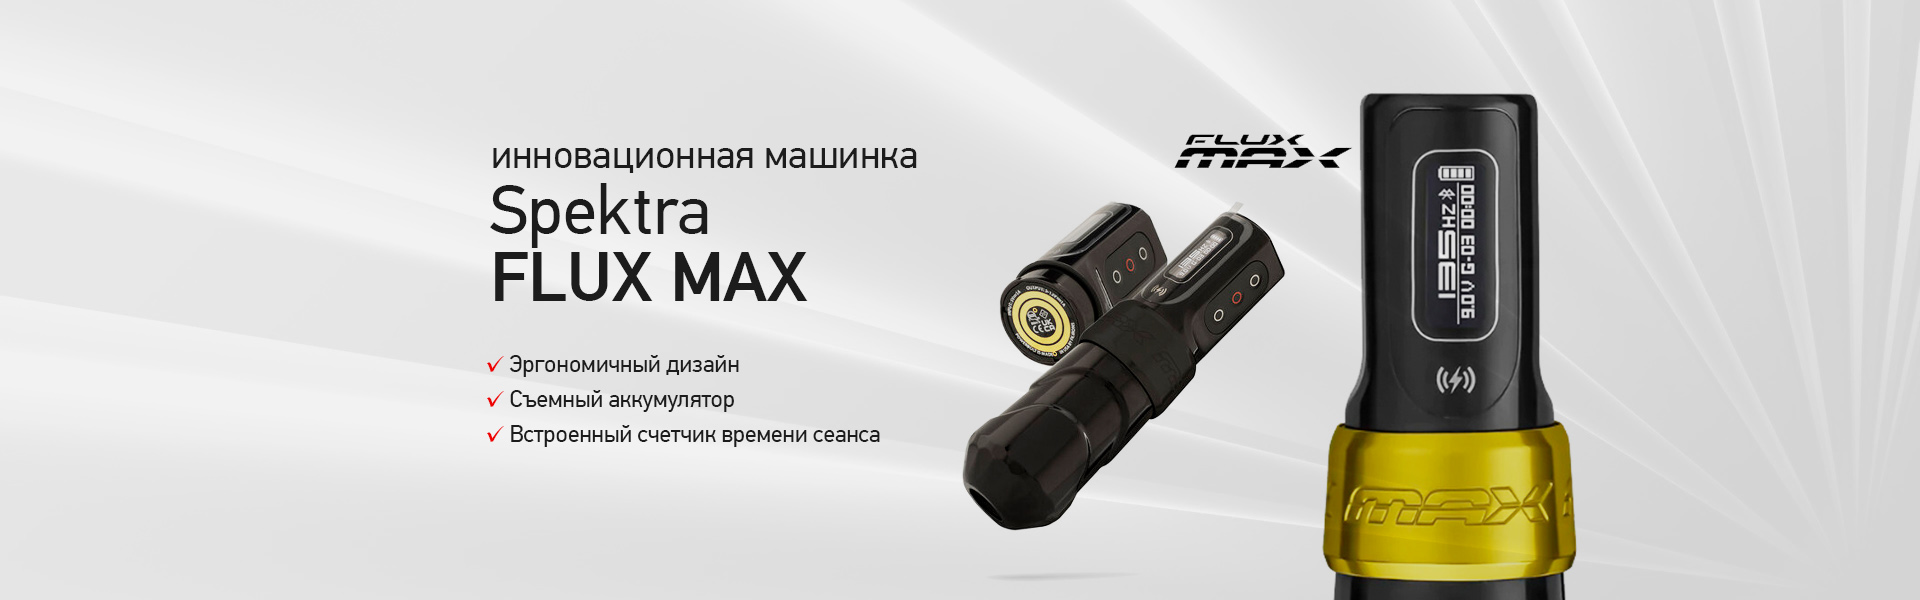 Spektra Flux Max